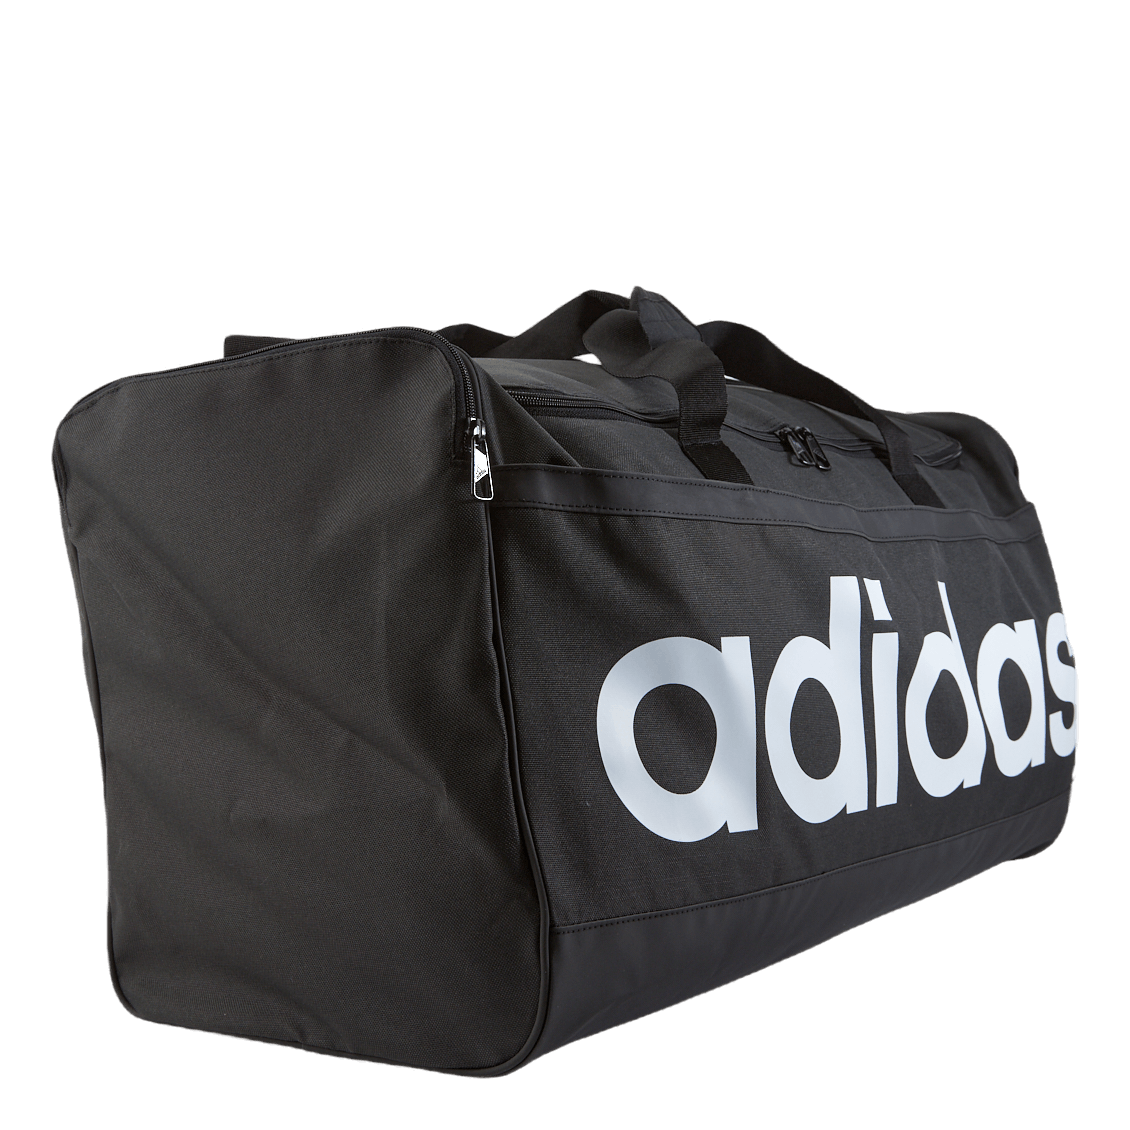 Essentials Duffel Bag Large Black / White